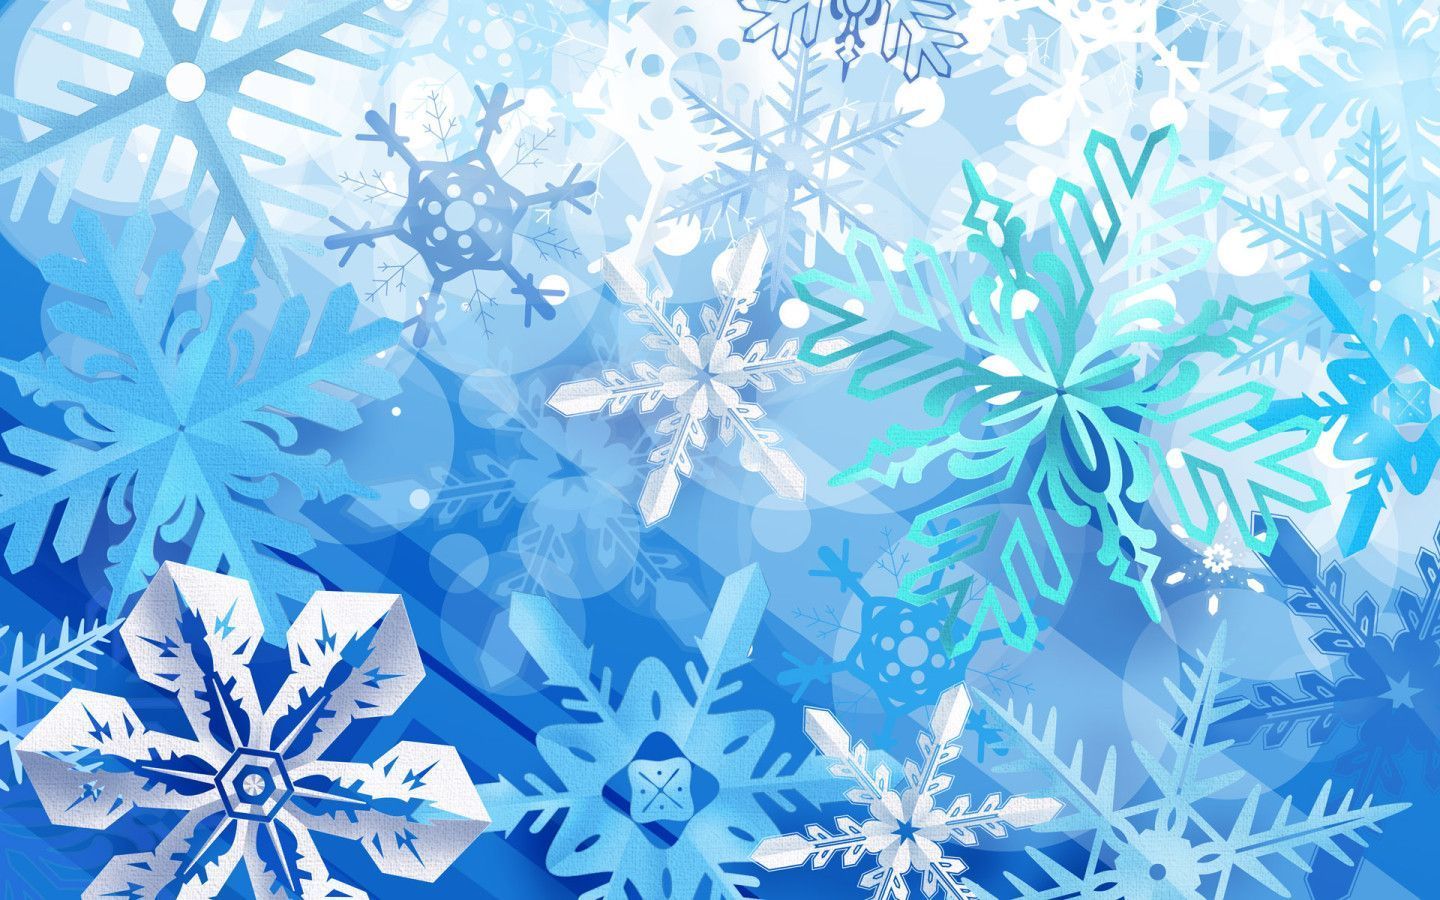 Neckbofirta desktop winter wallpaper